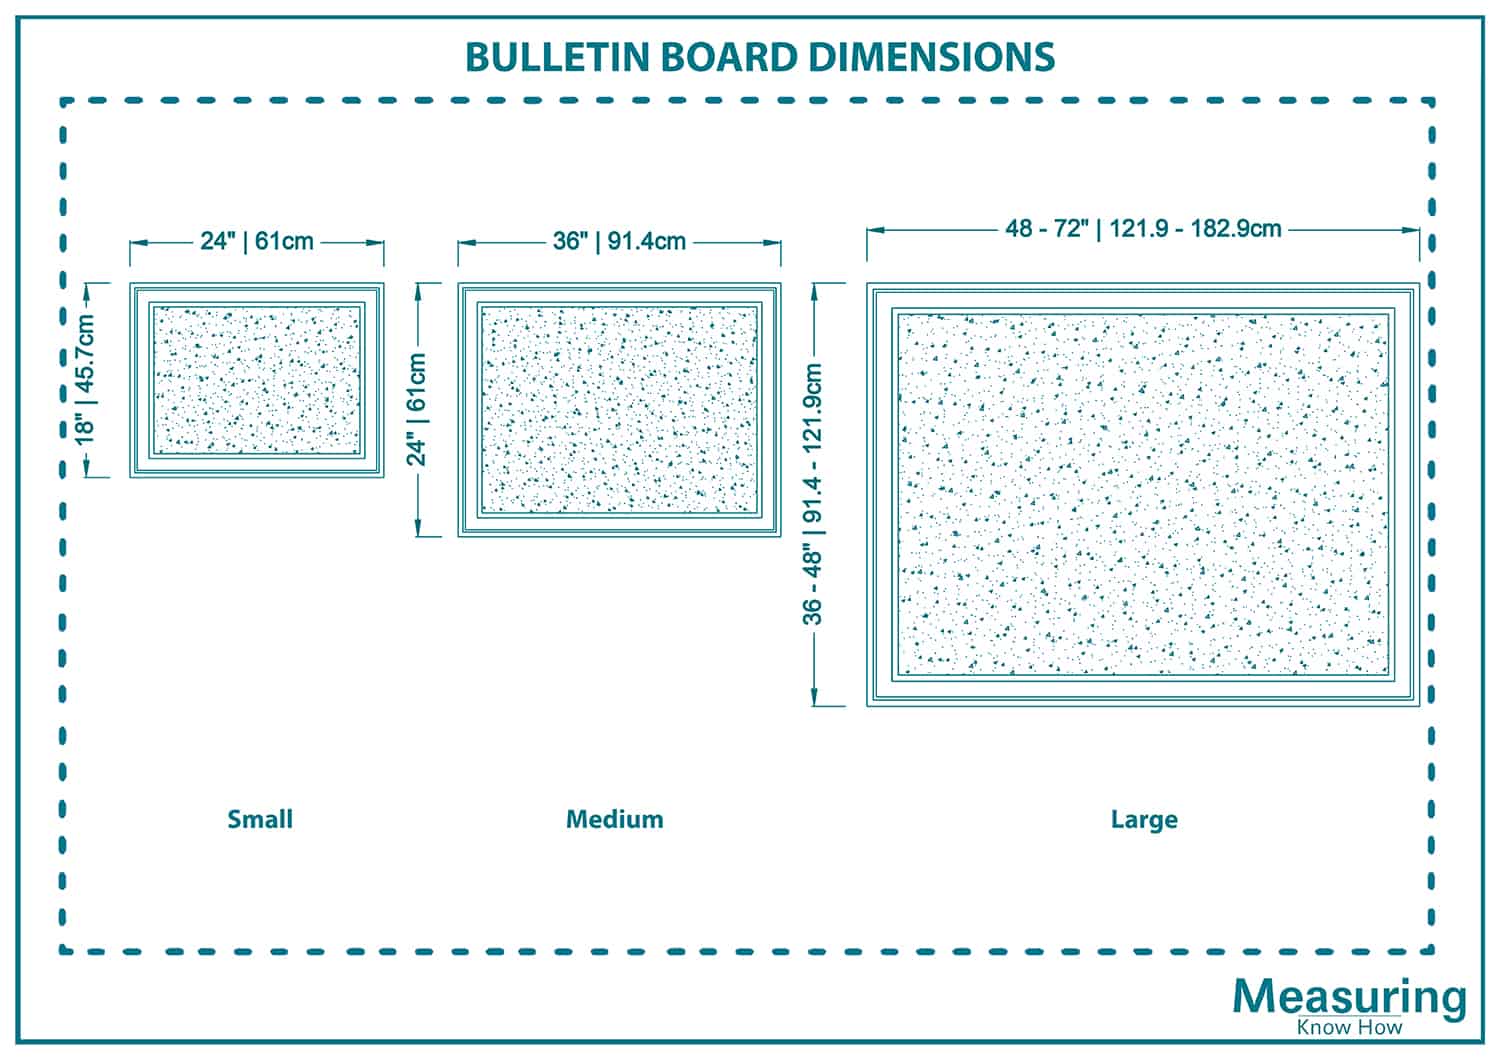 Bulletin board diemensions